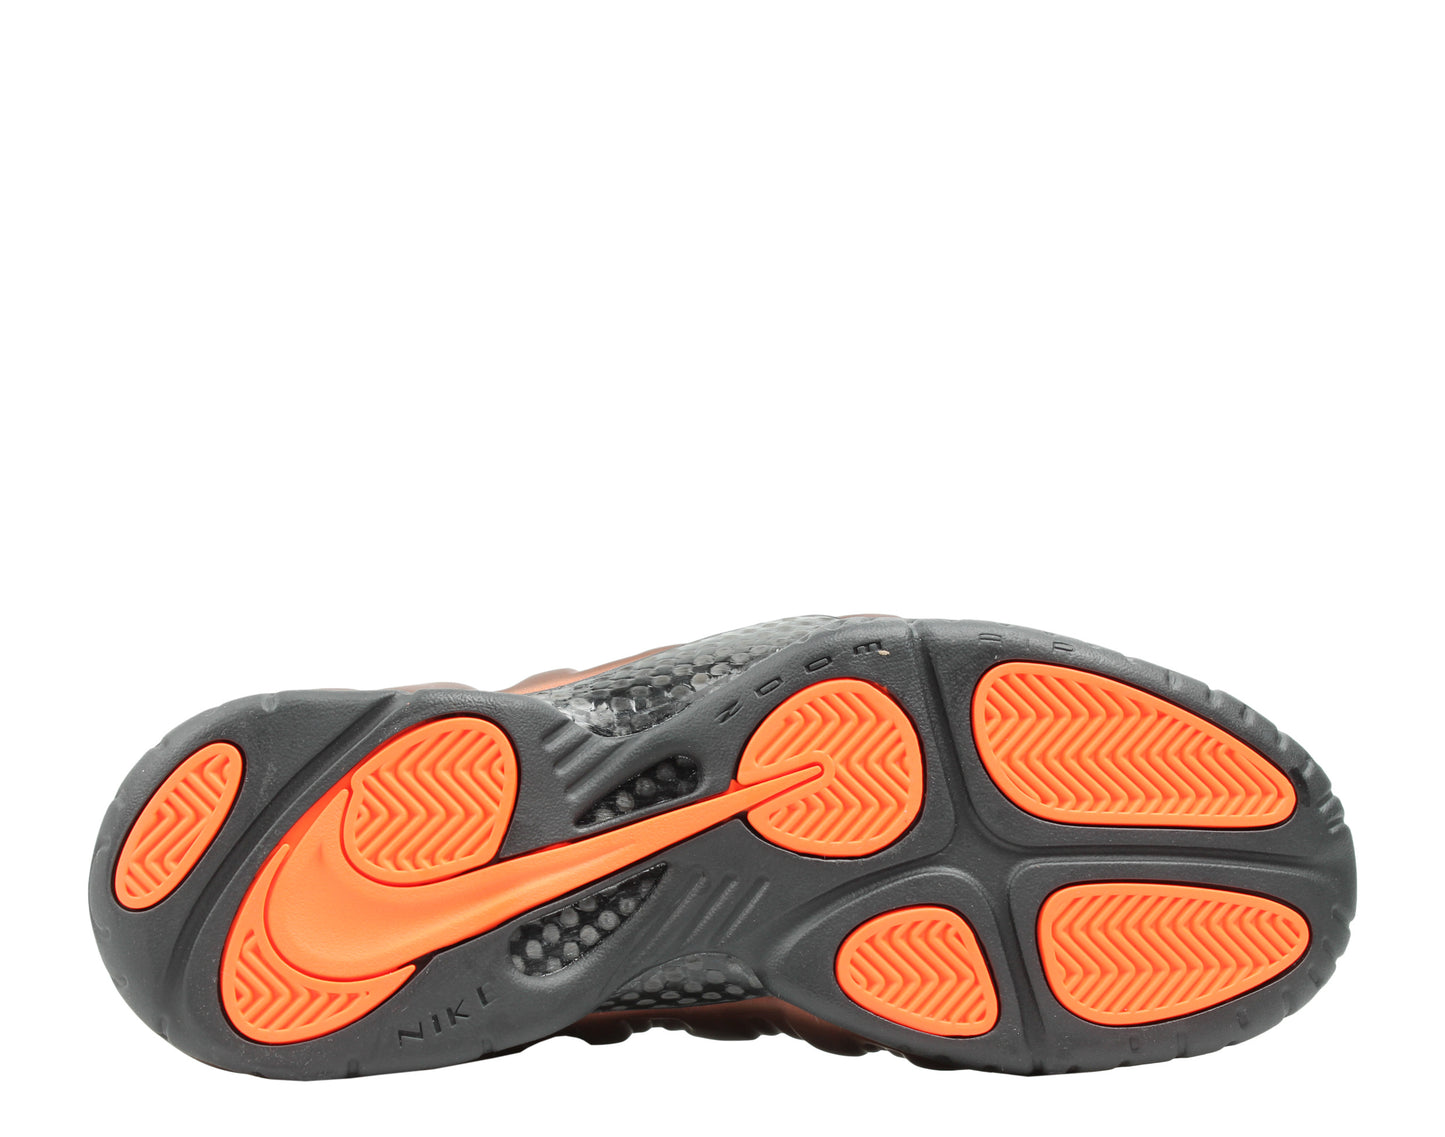 Nike Air Foamposite Pro Hyper Crimson/Black Men's Basketball Shoes 624041-800